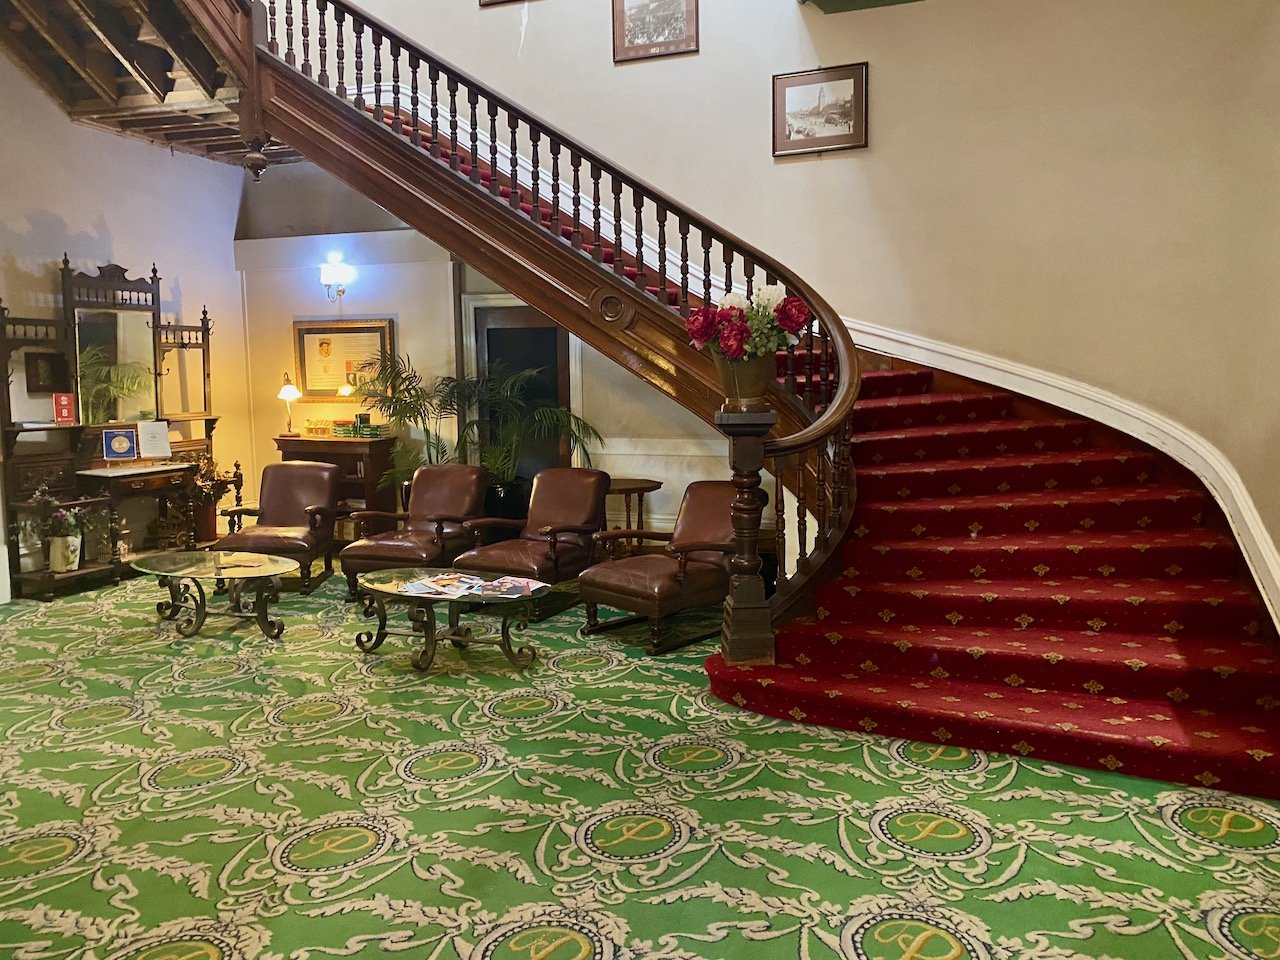 The lobby of the Palace Hotel, Kalgoorlie (Alex Sherlock, 2022)